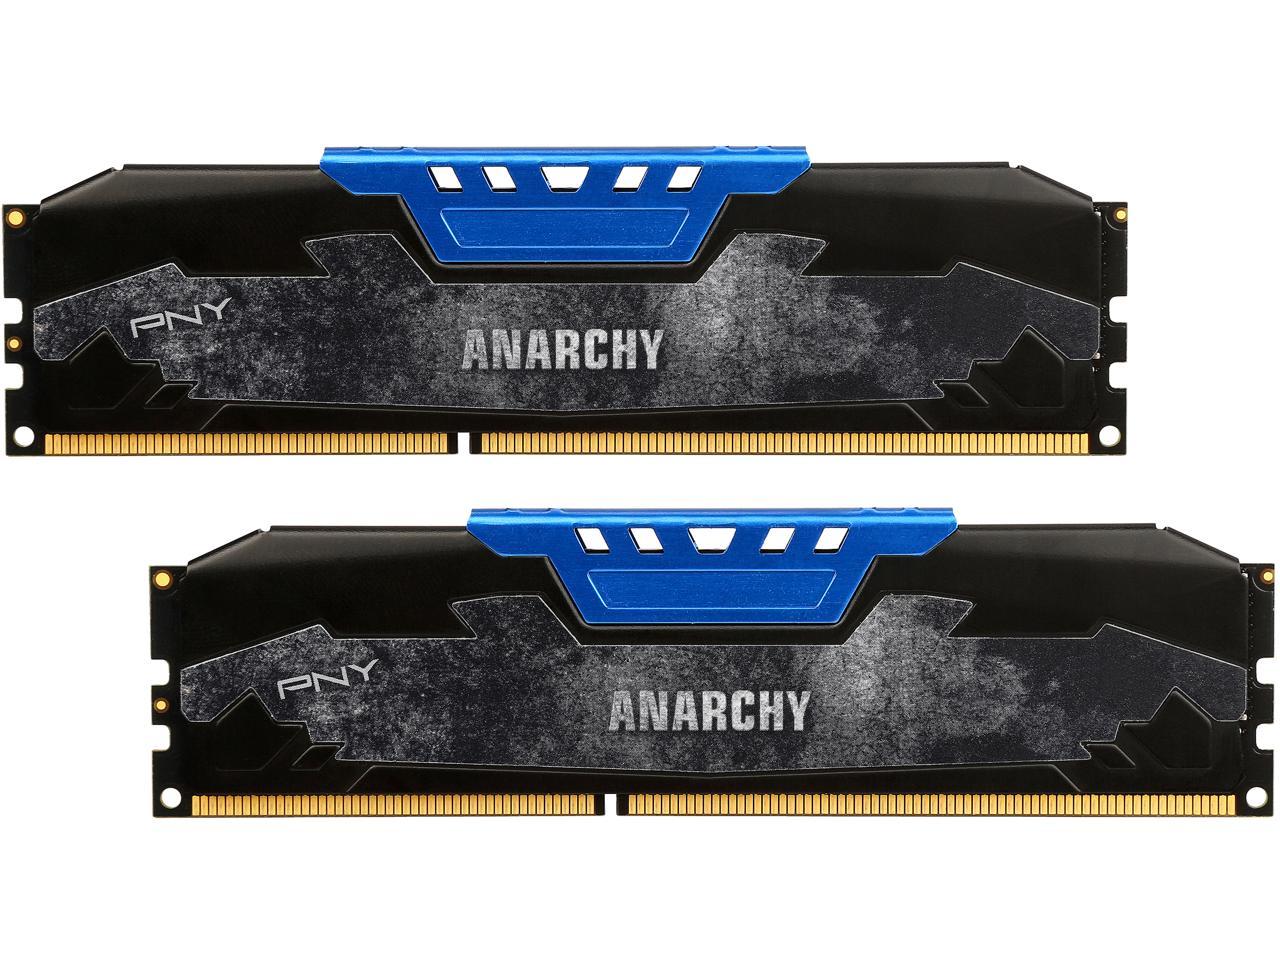 PNY Anarchy 16GB Kit CL15 Desktop Memory - MD16GK2D4240015AB PC4-19200 2x8GB DDR4 2400MHz BLUE